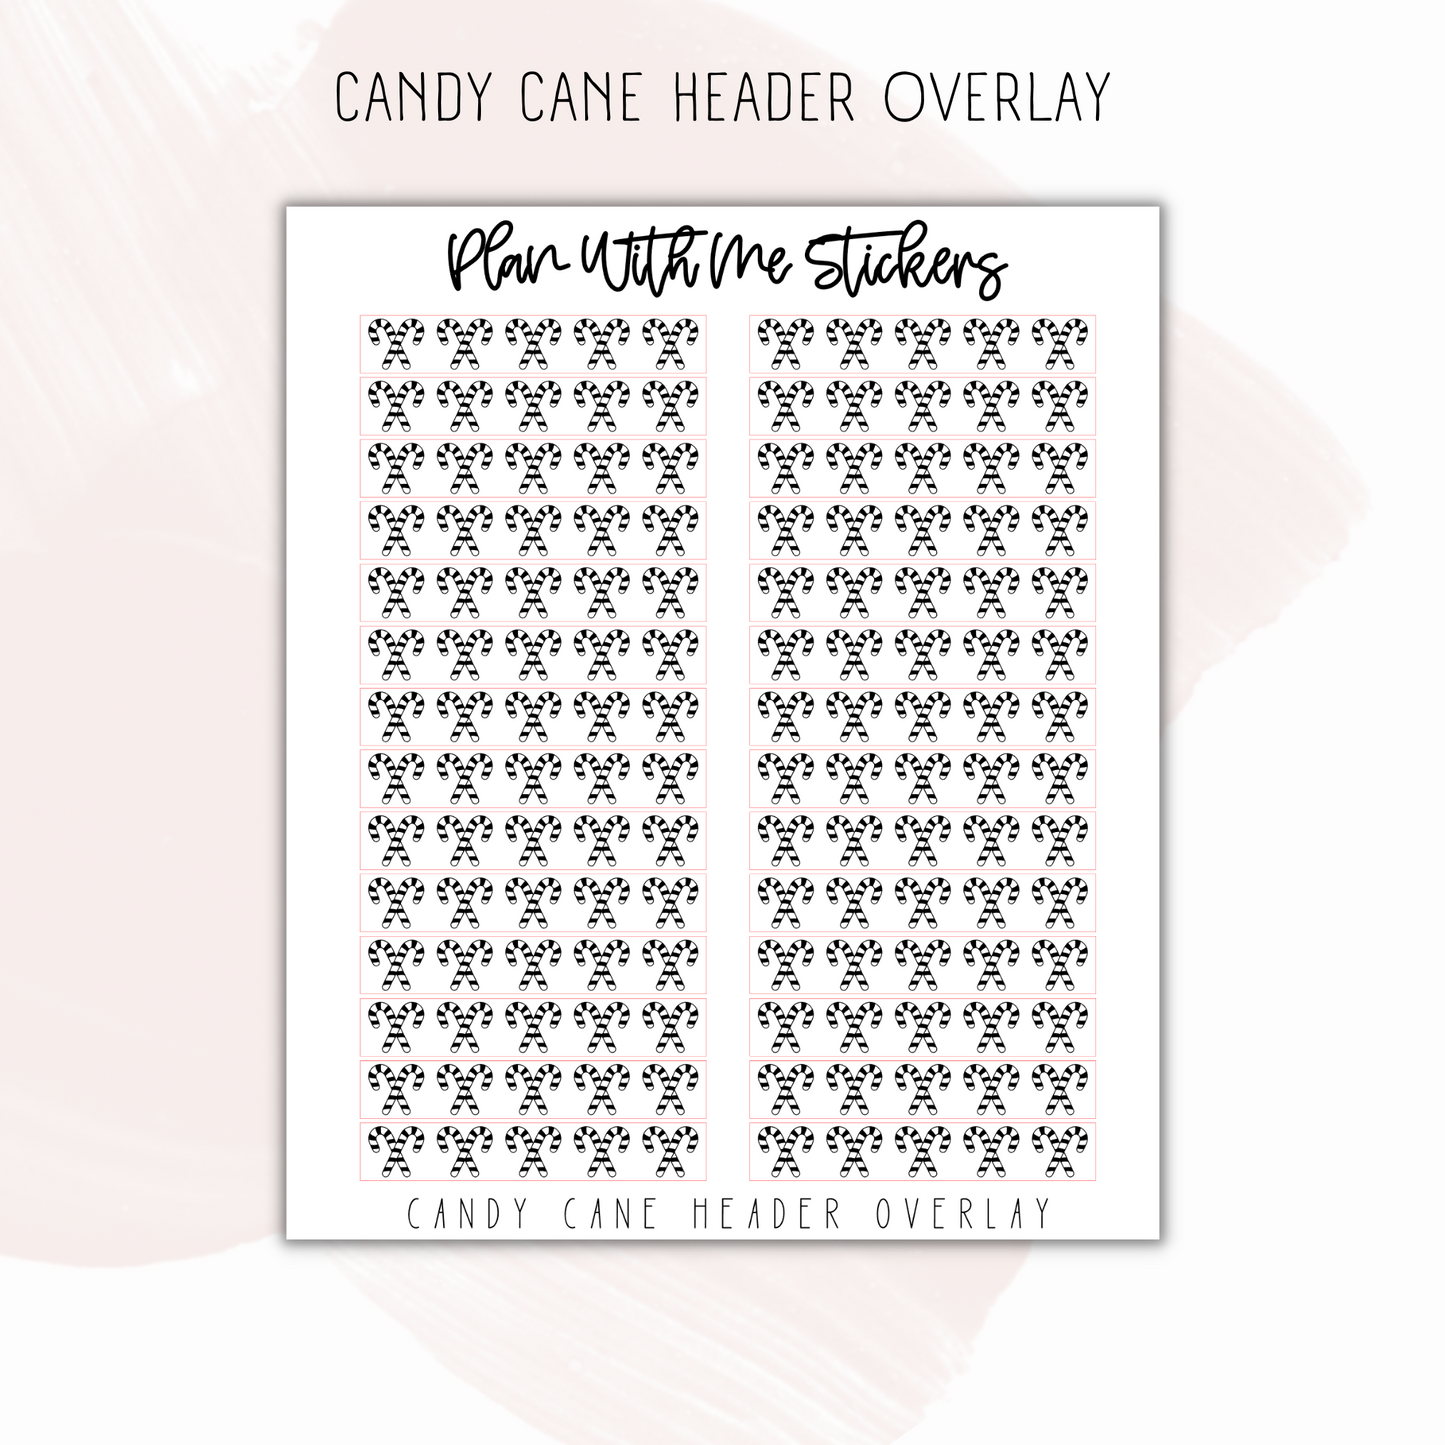 Candy Cane Header Overlays